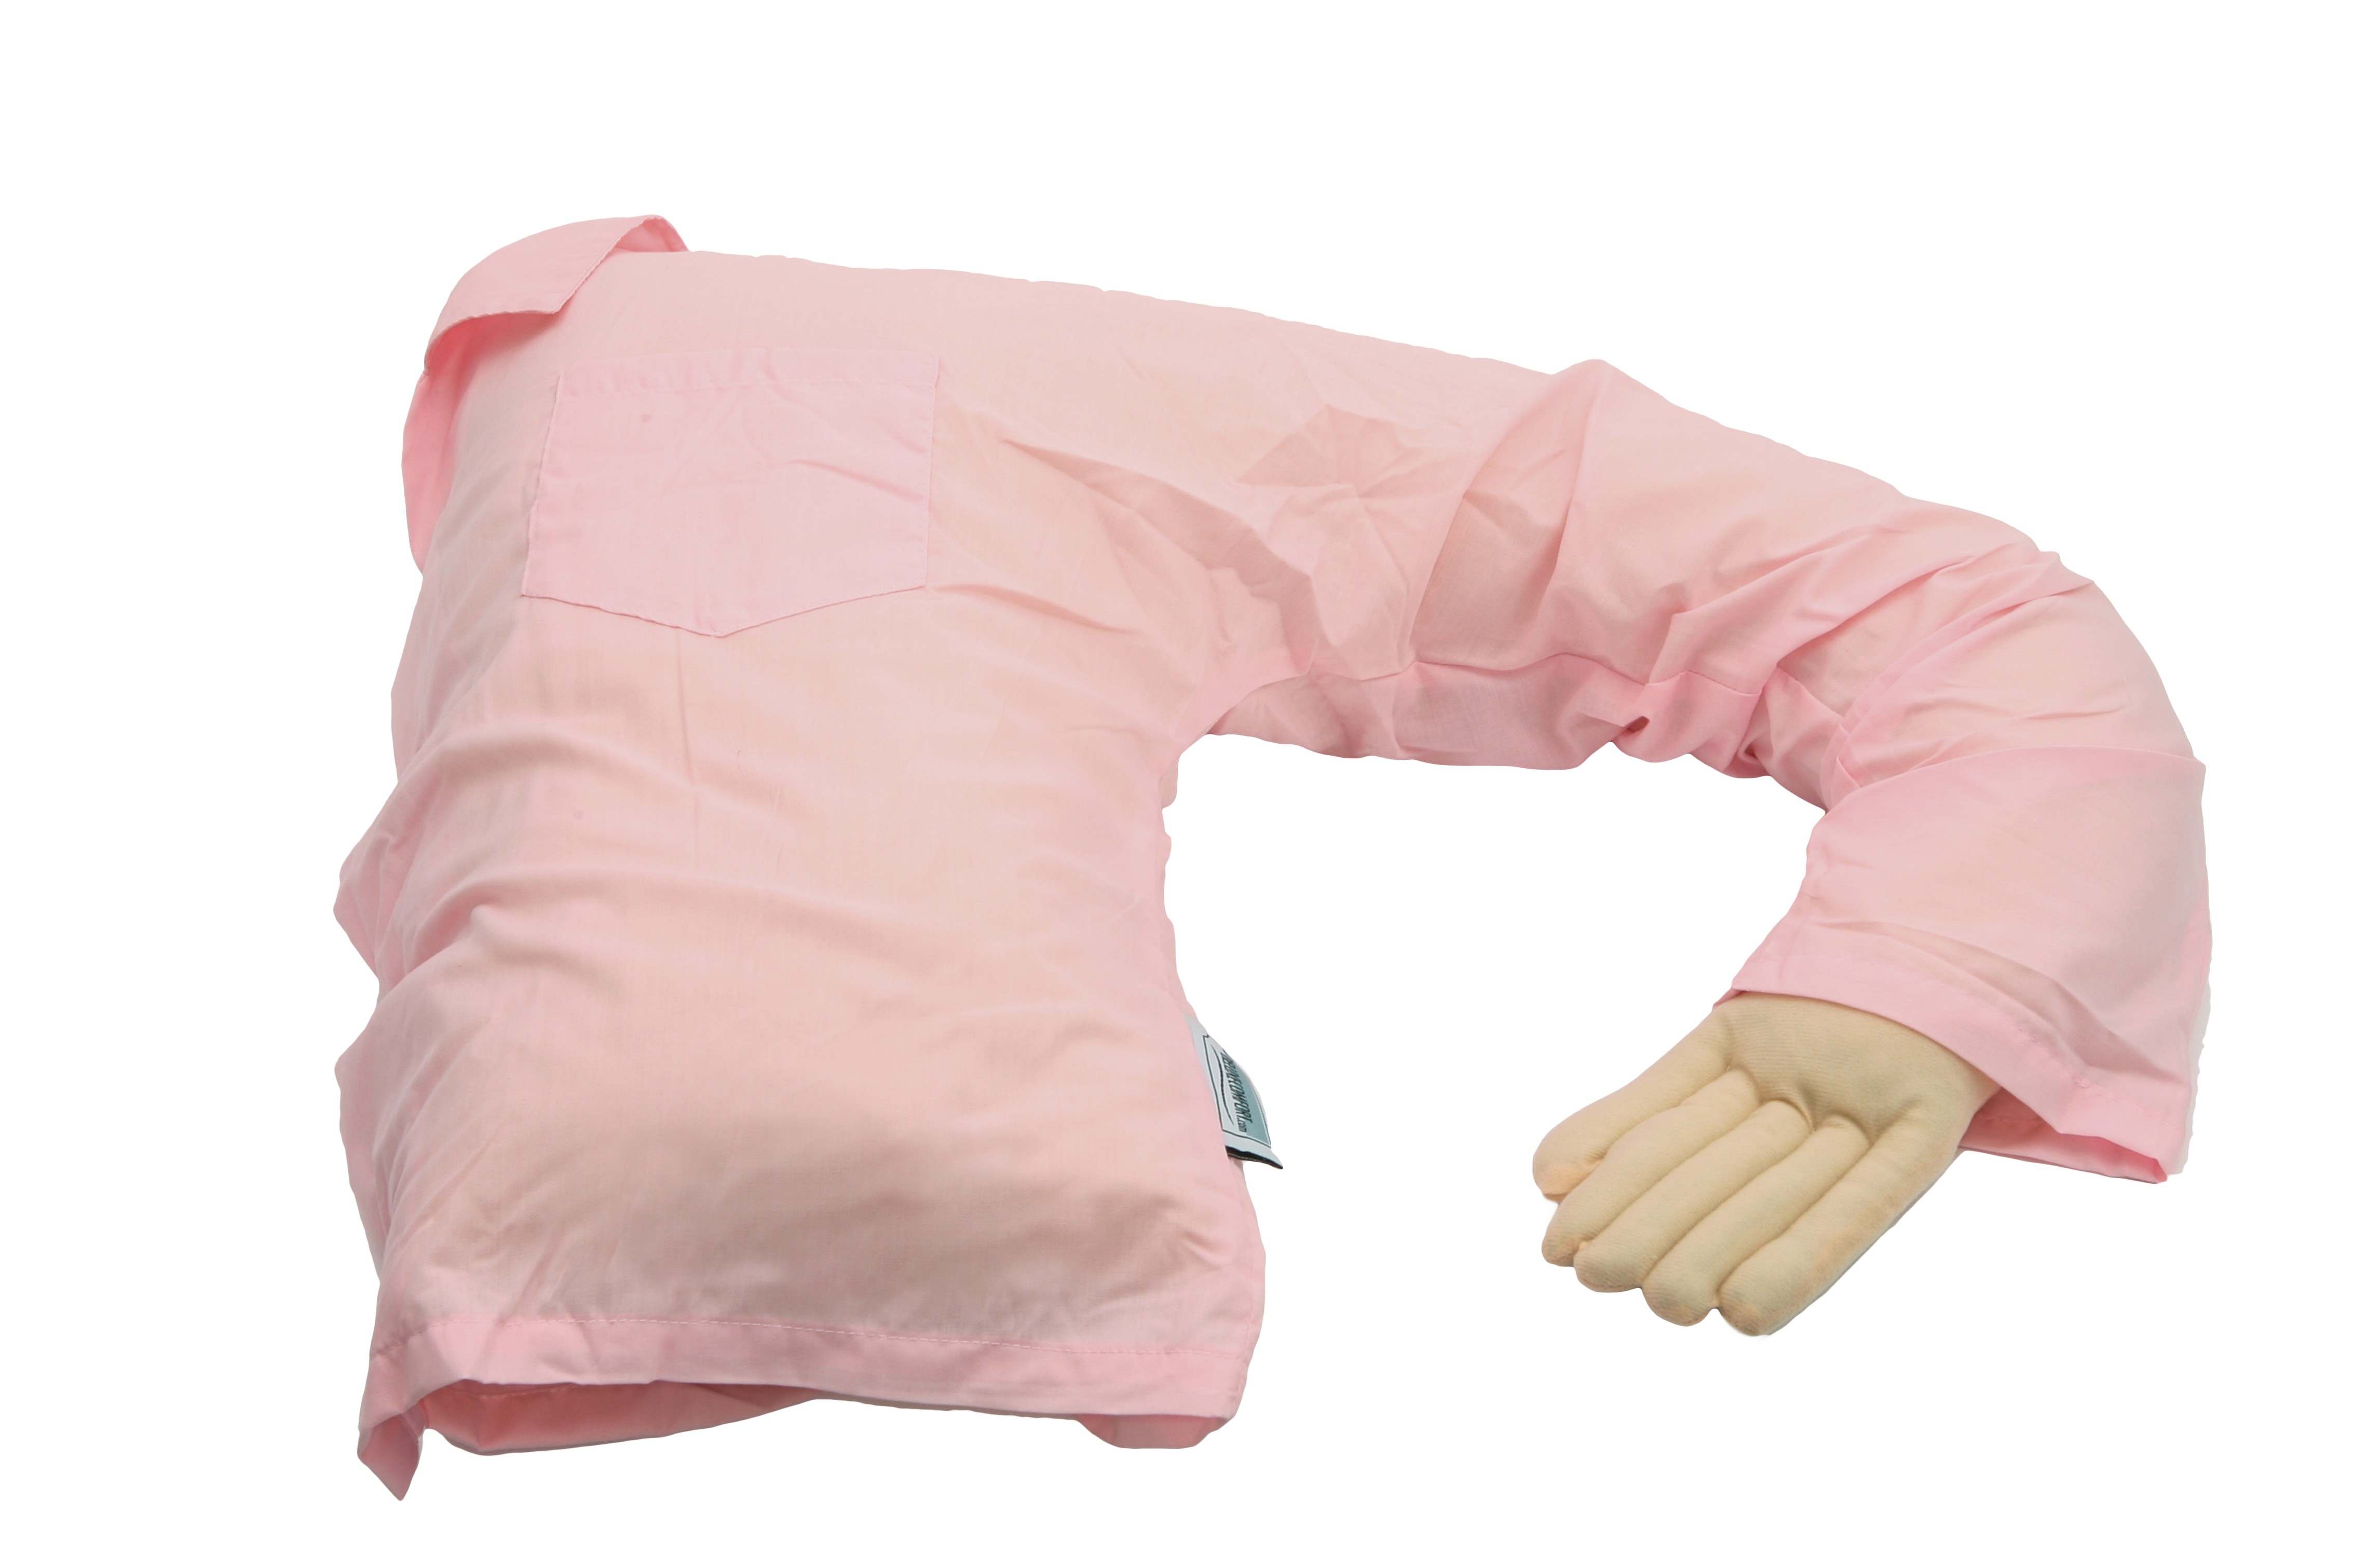 a boyfriend pillow